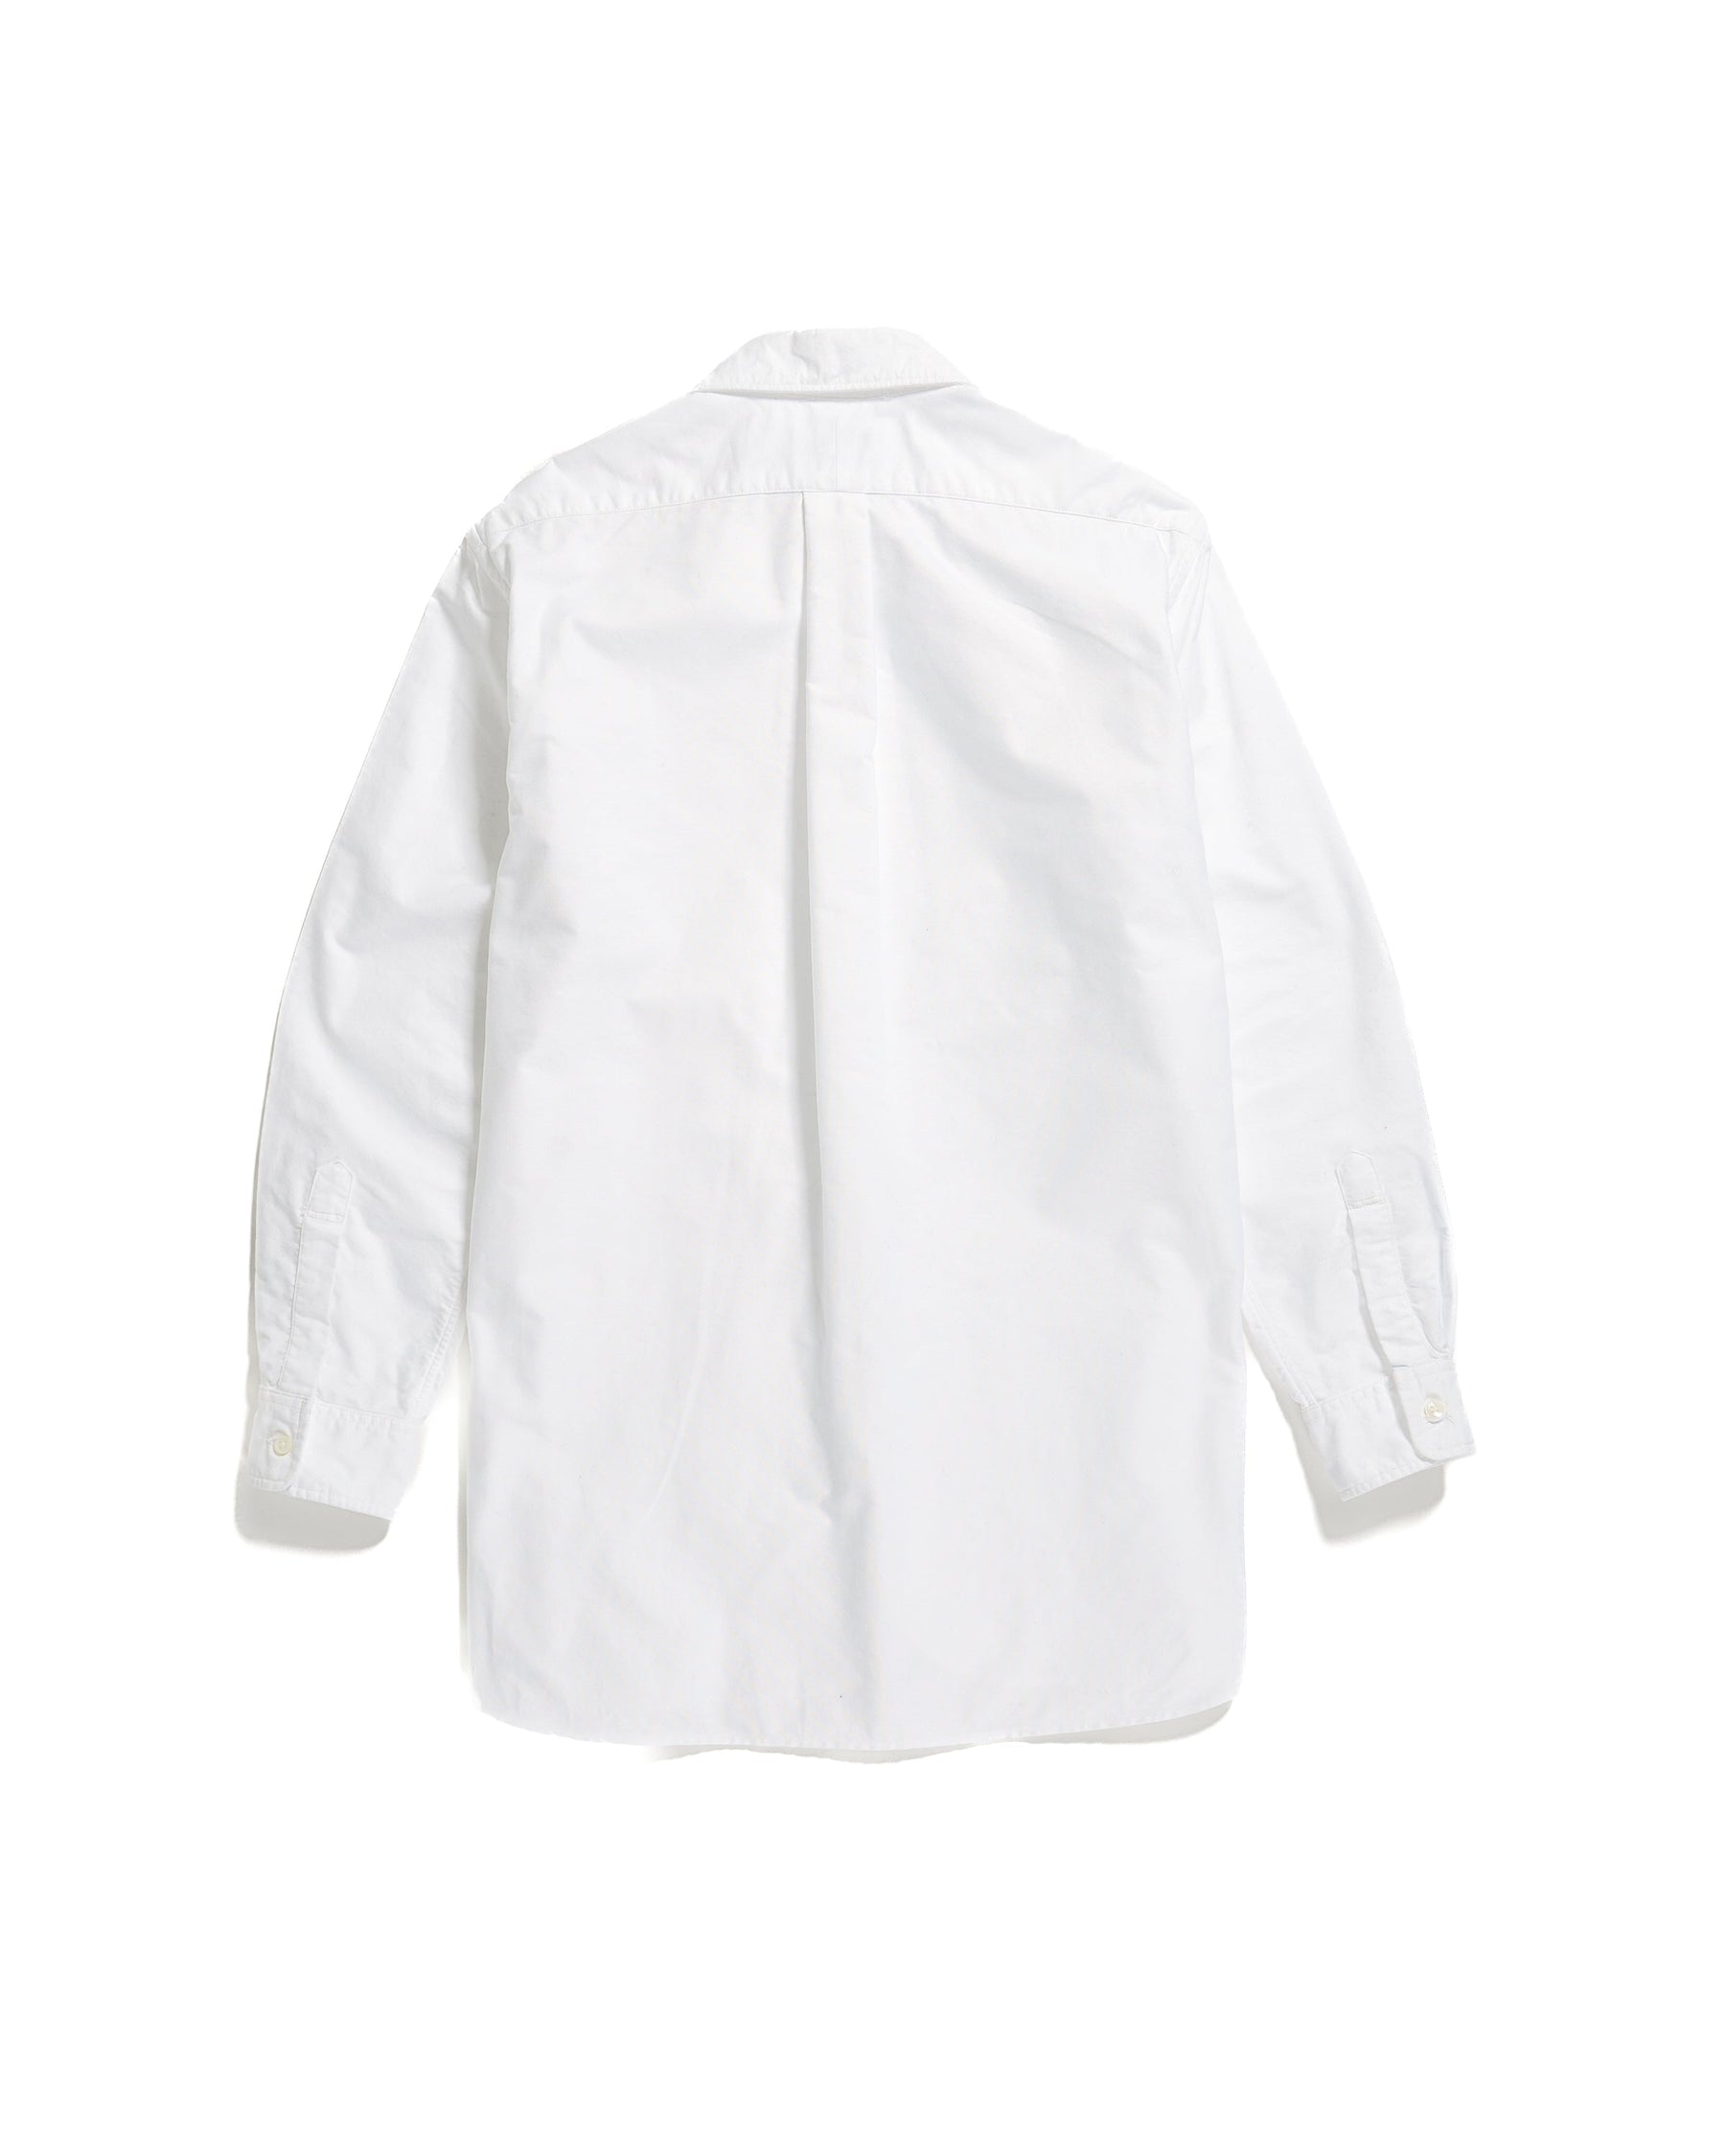 th Century BD Shirt in White Cotton Oxford